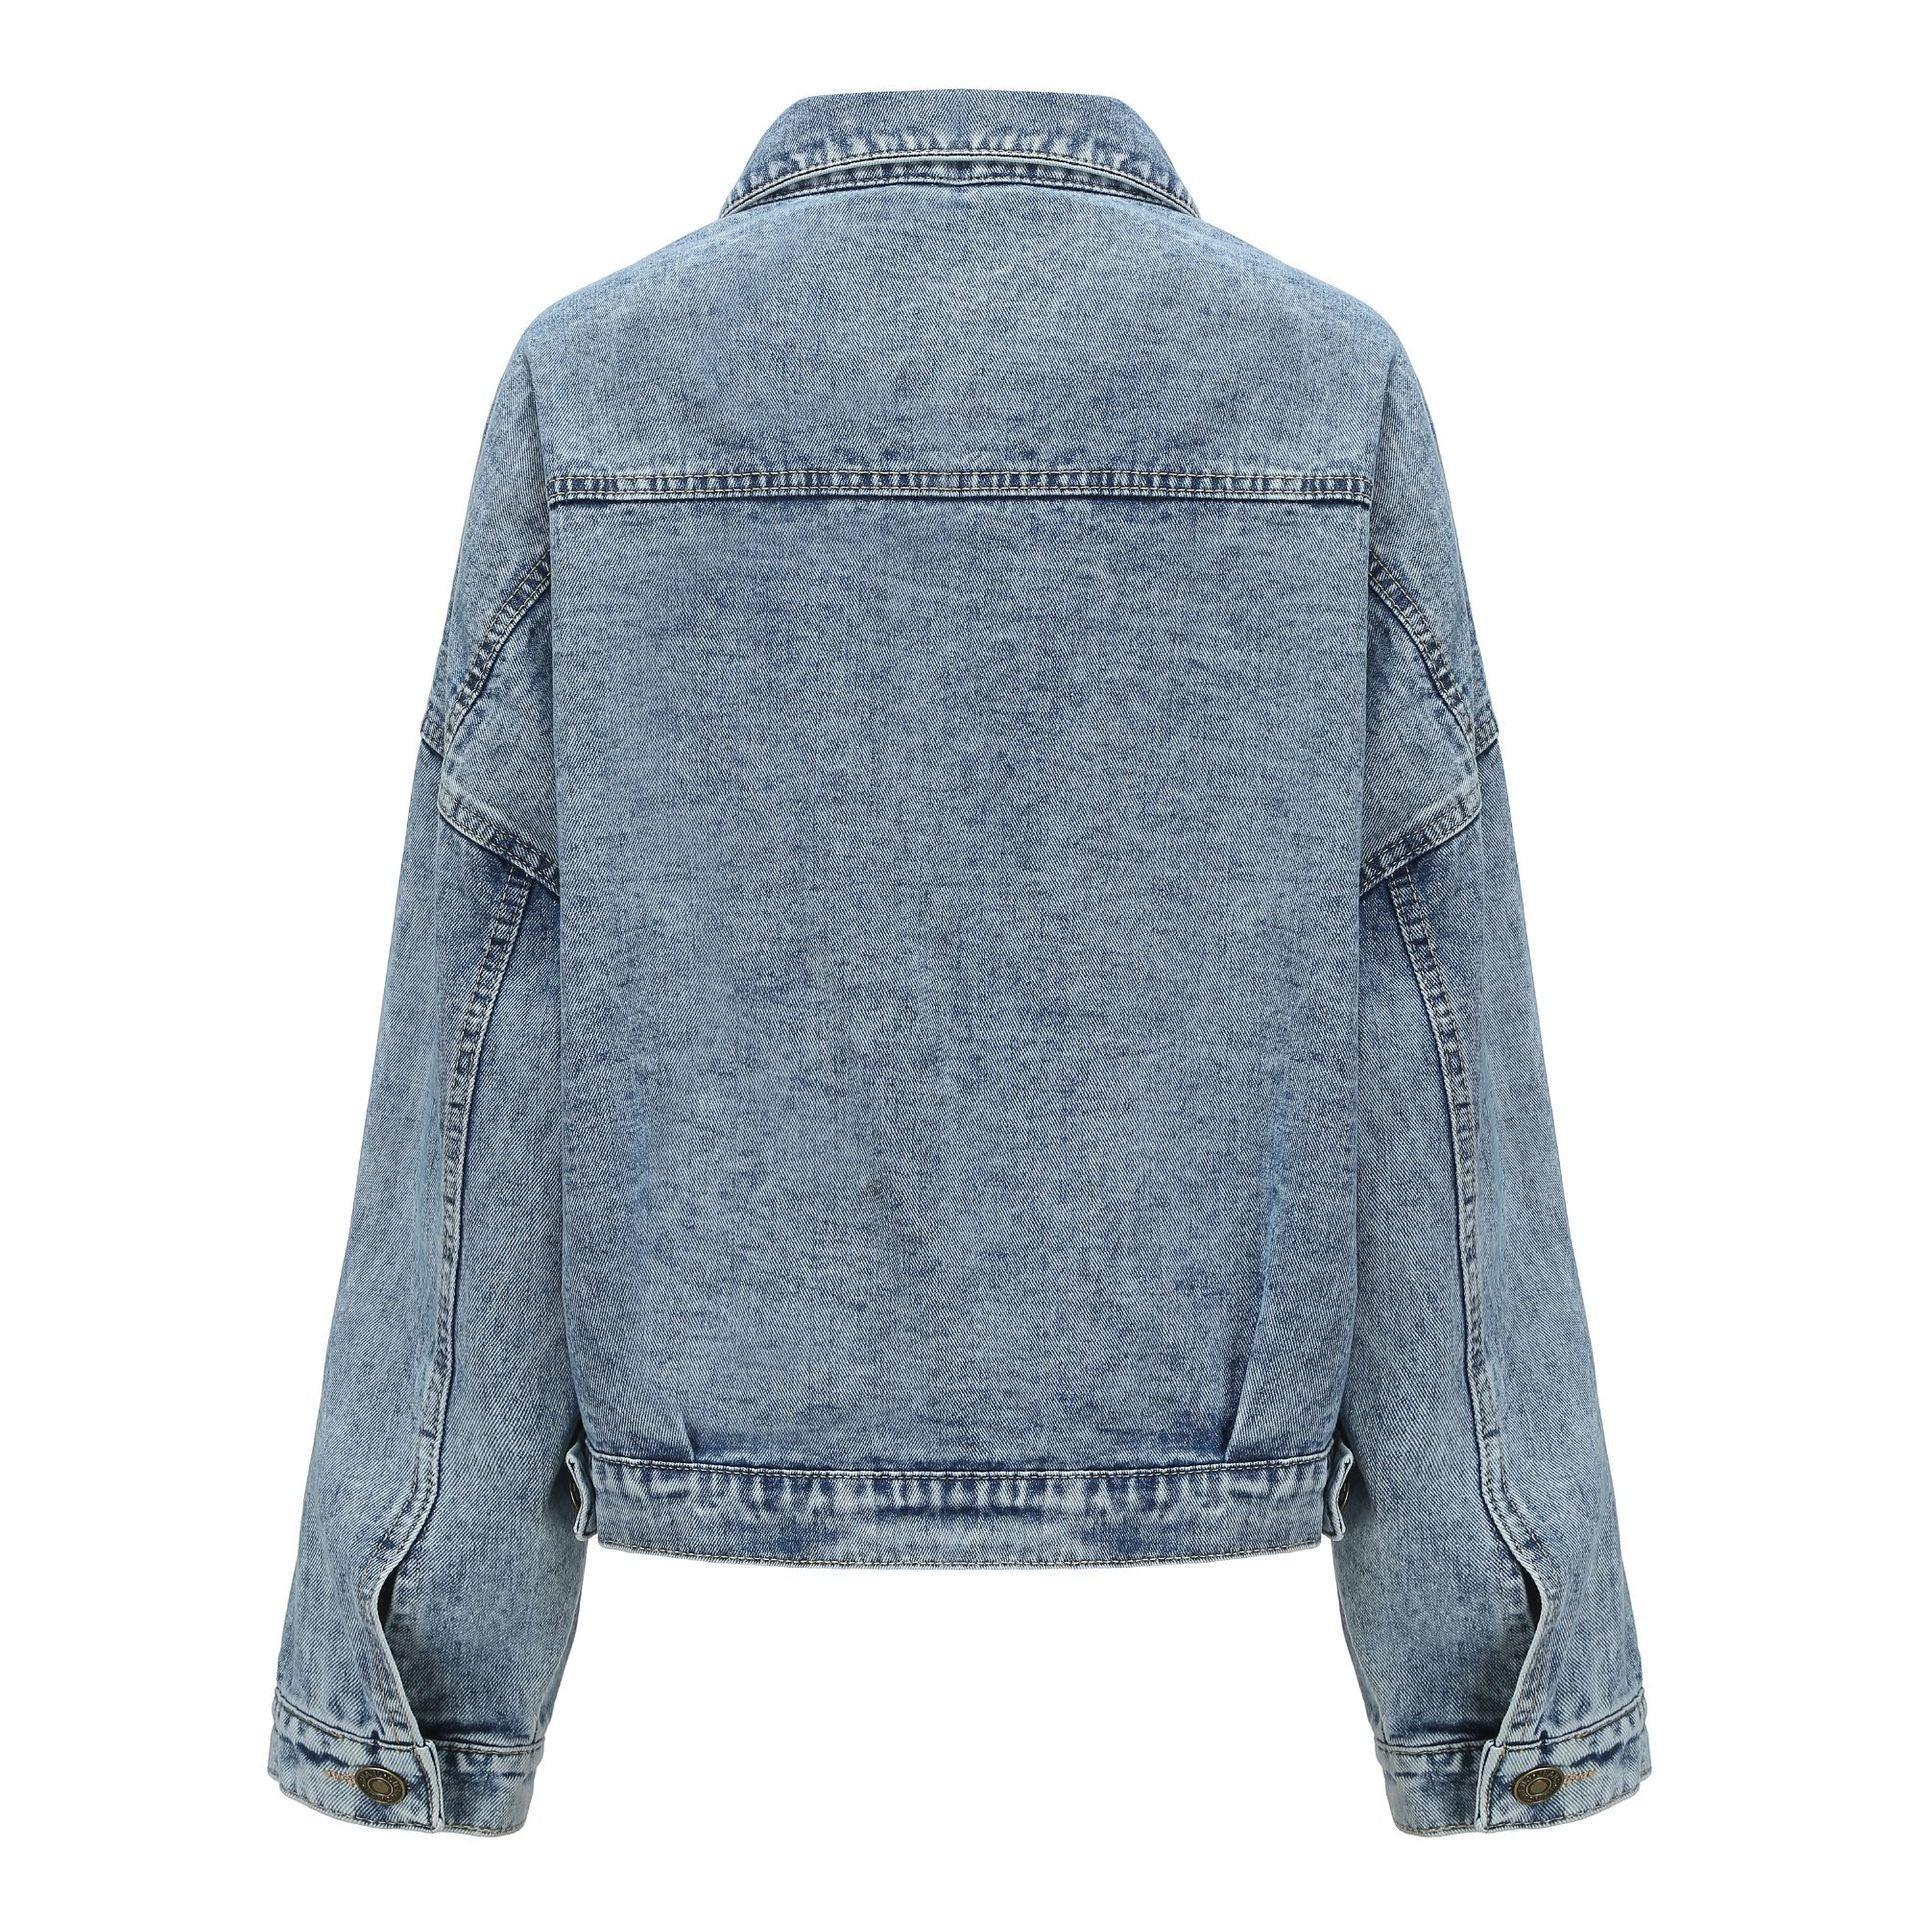 Blue Short Casual Denim Jacket - Effortless Style for the Modern Casual Look - ForVanity denim, jackets, jackets & coats, women's clothing Denim Jacket